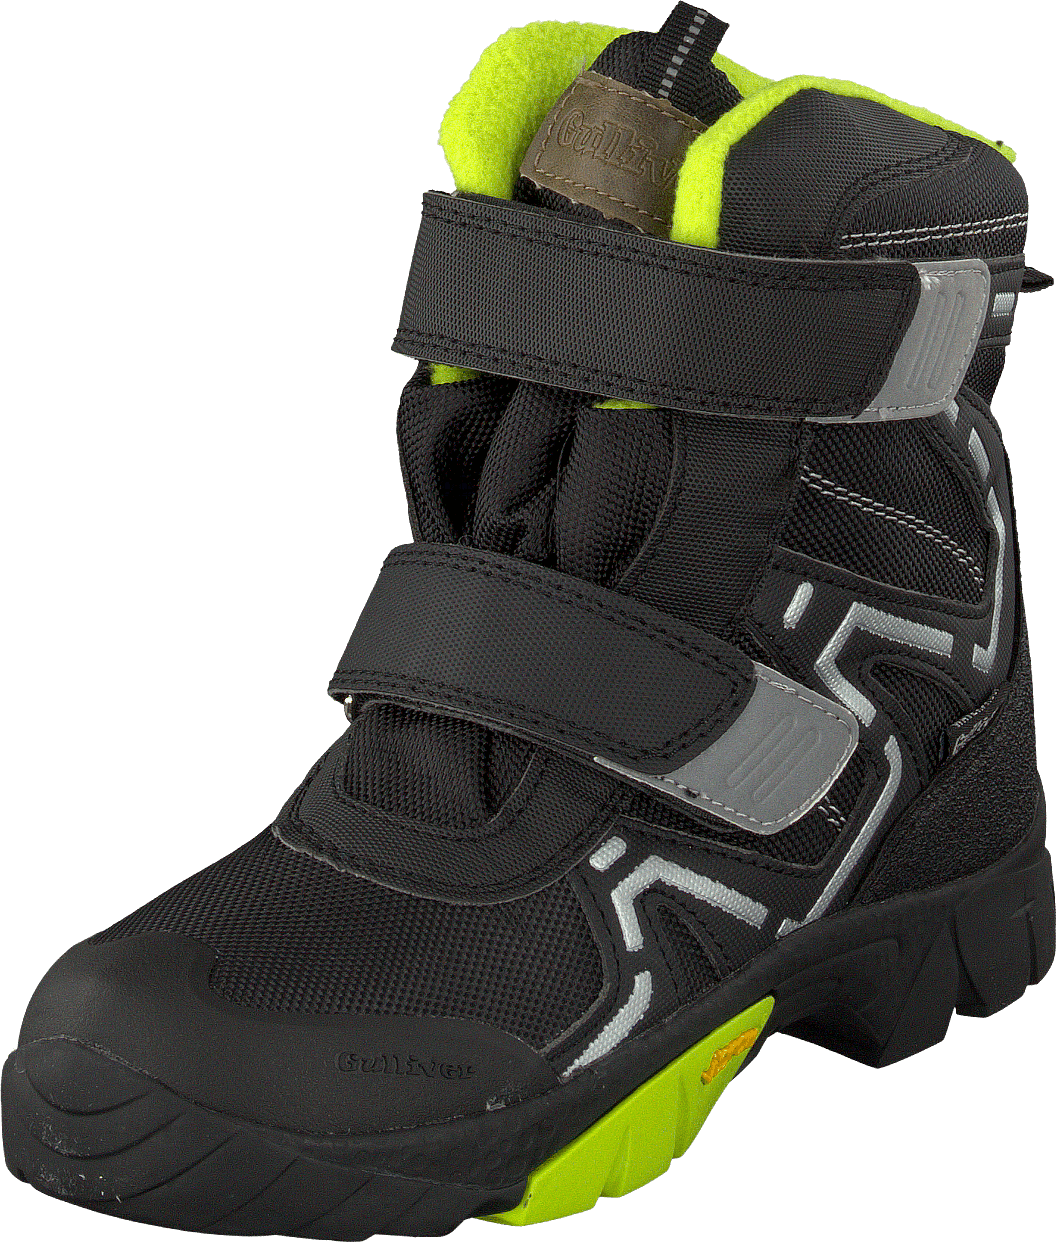 430-0993 Boots Waterproof Black/Lime